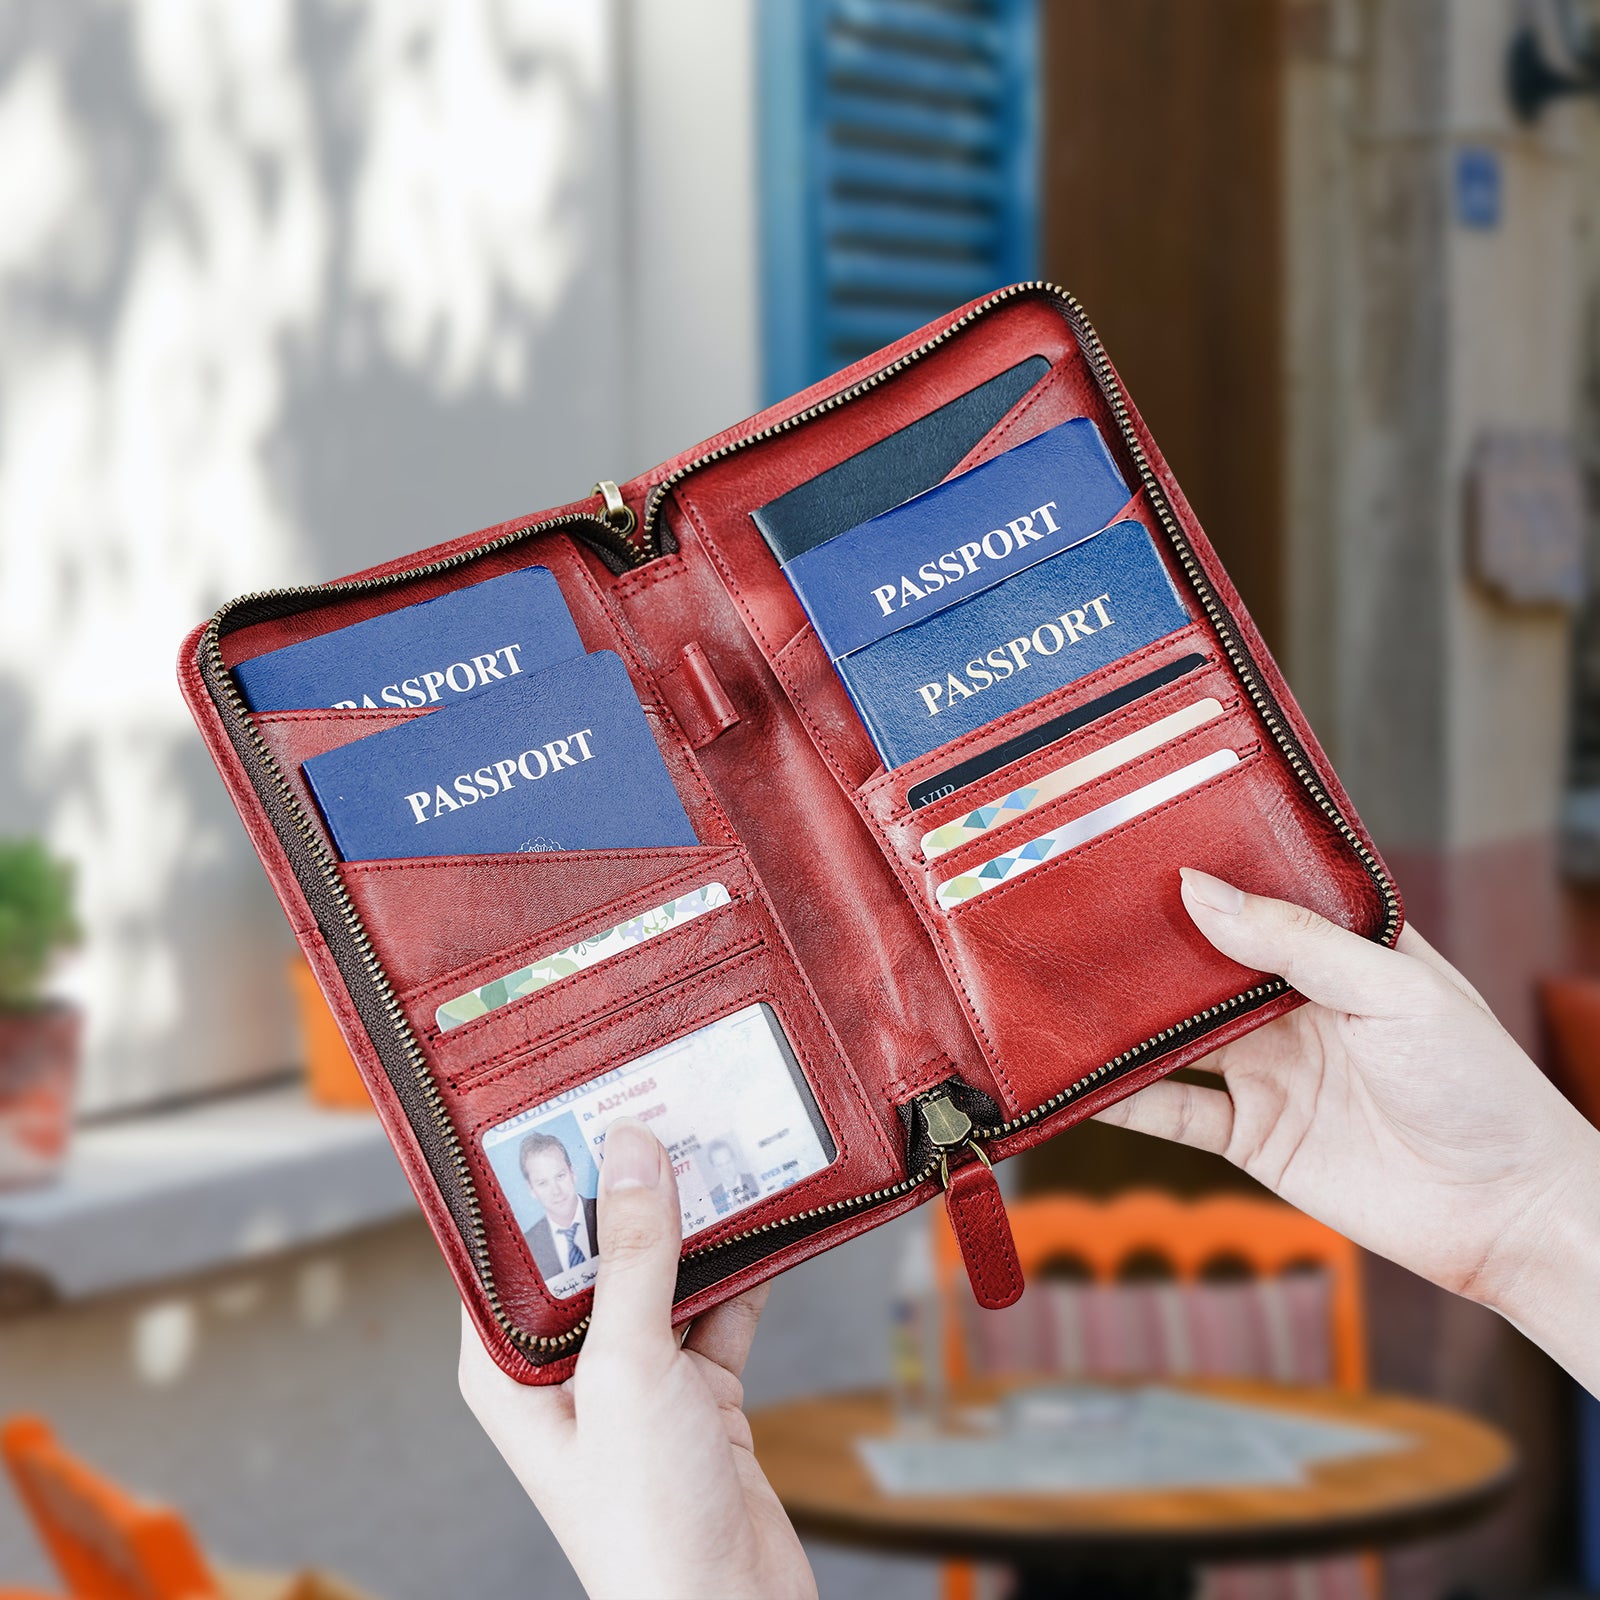 Polare Full Grain Leather RFID Blocking Family Travel Wallet Holds 6 Passports (Scenario Shows)